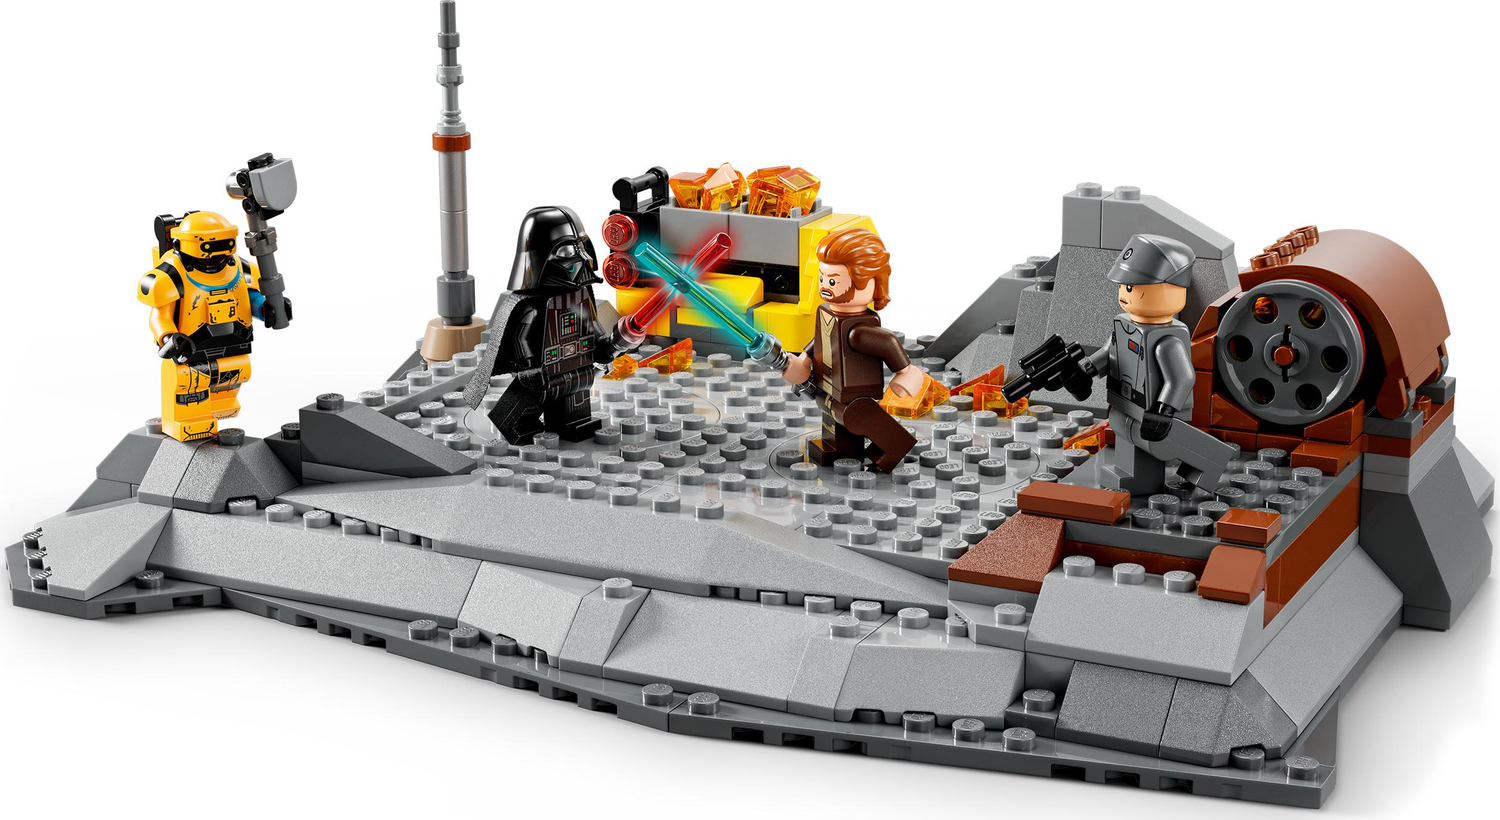 Darth Vader - LEGO Star Wars Figure : : Toys & Games